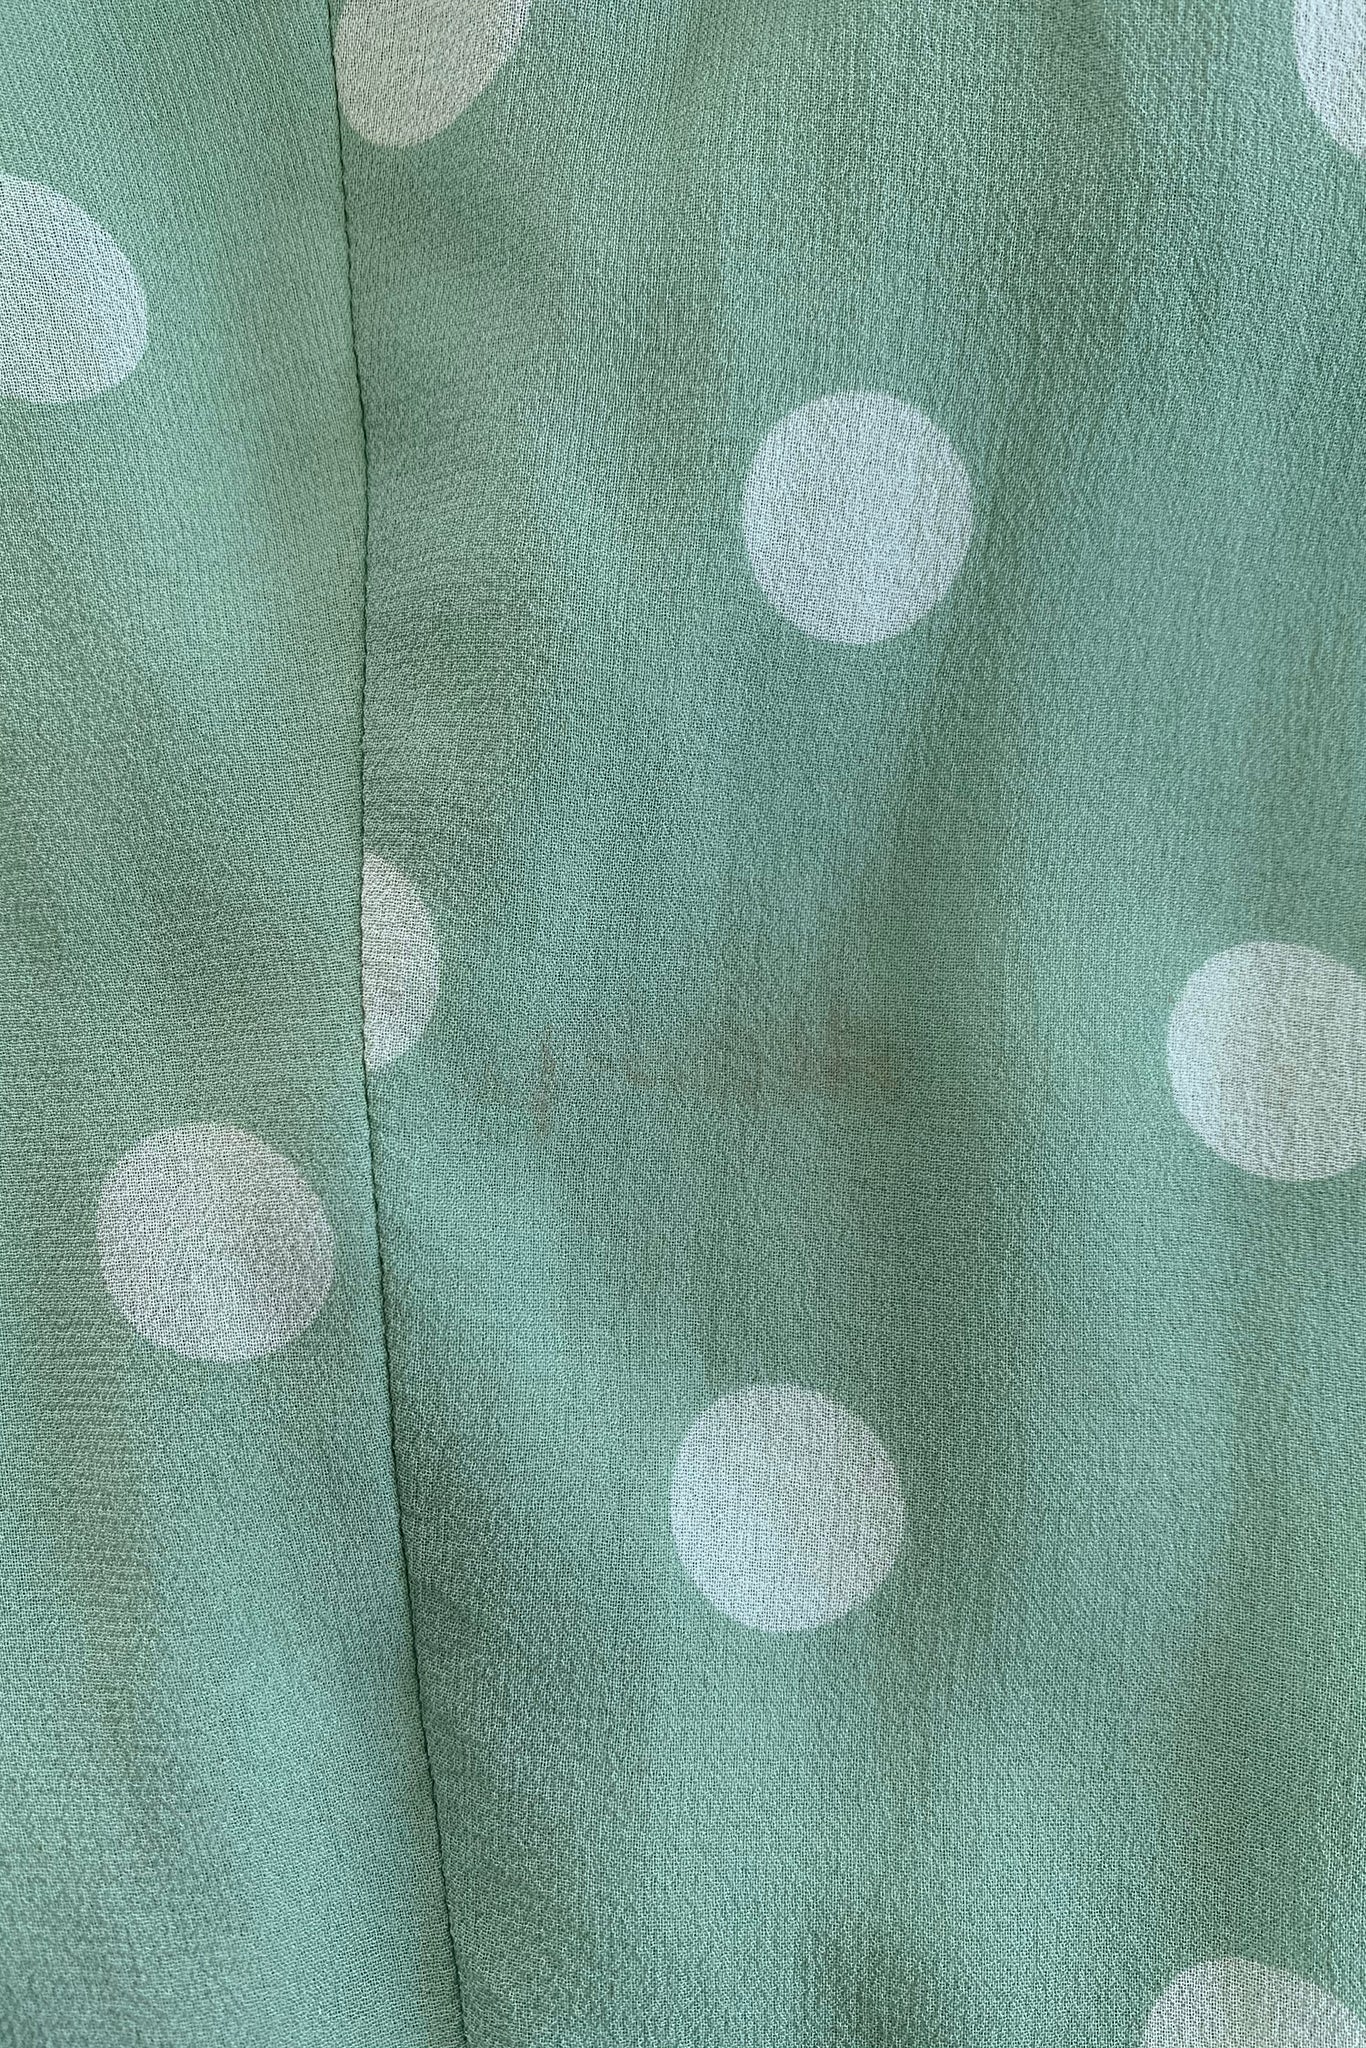 Vintage Givenchy Martha Sheer Chiffon Dot Blouse & Tie on stain at Recess LA